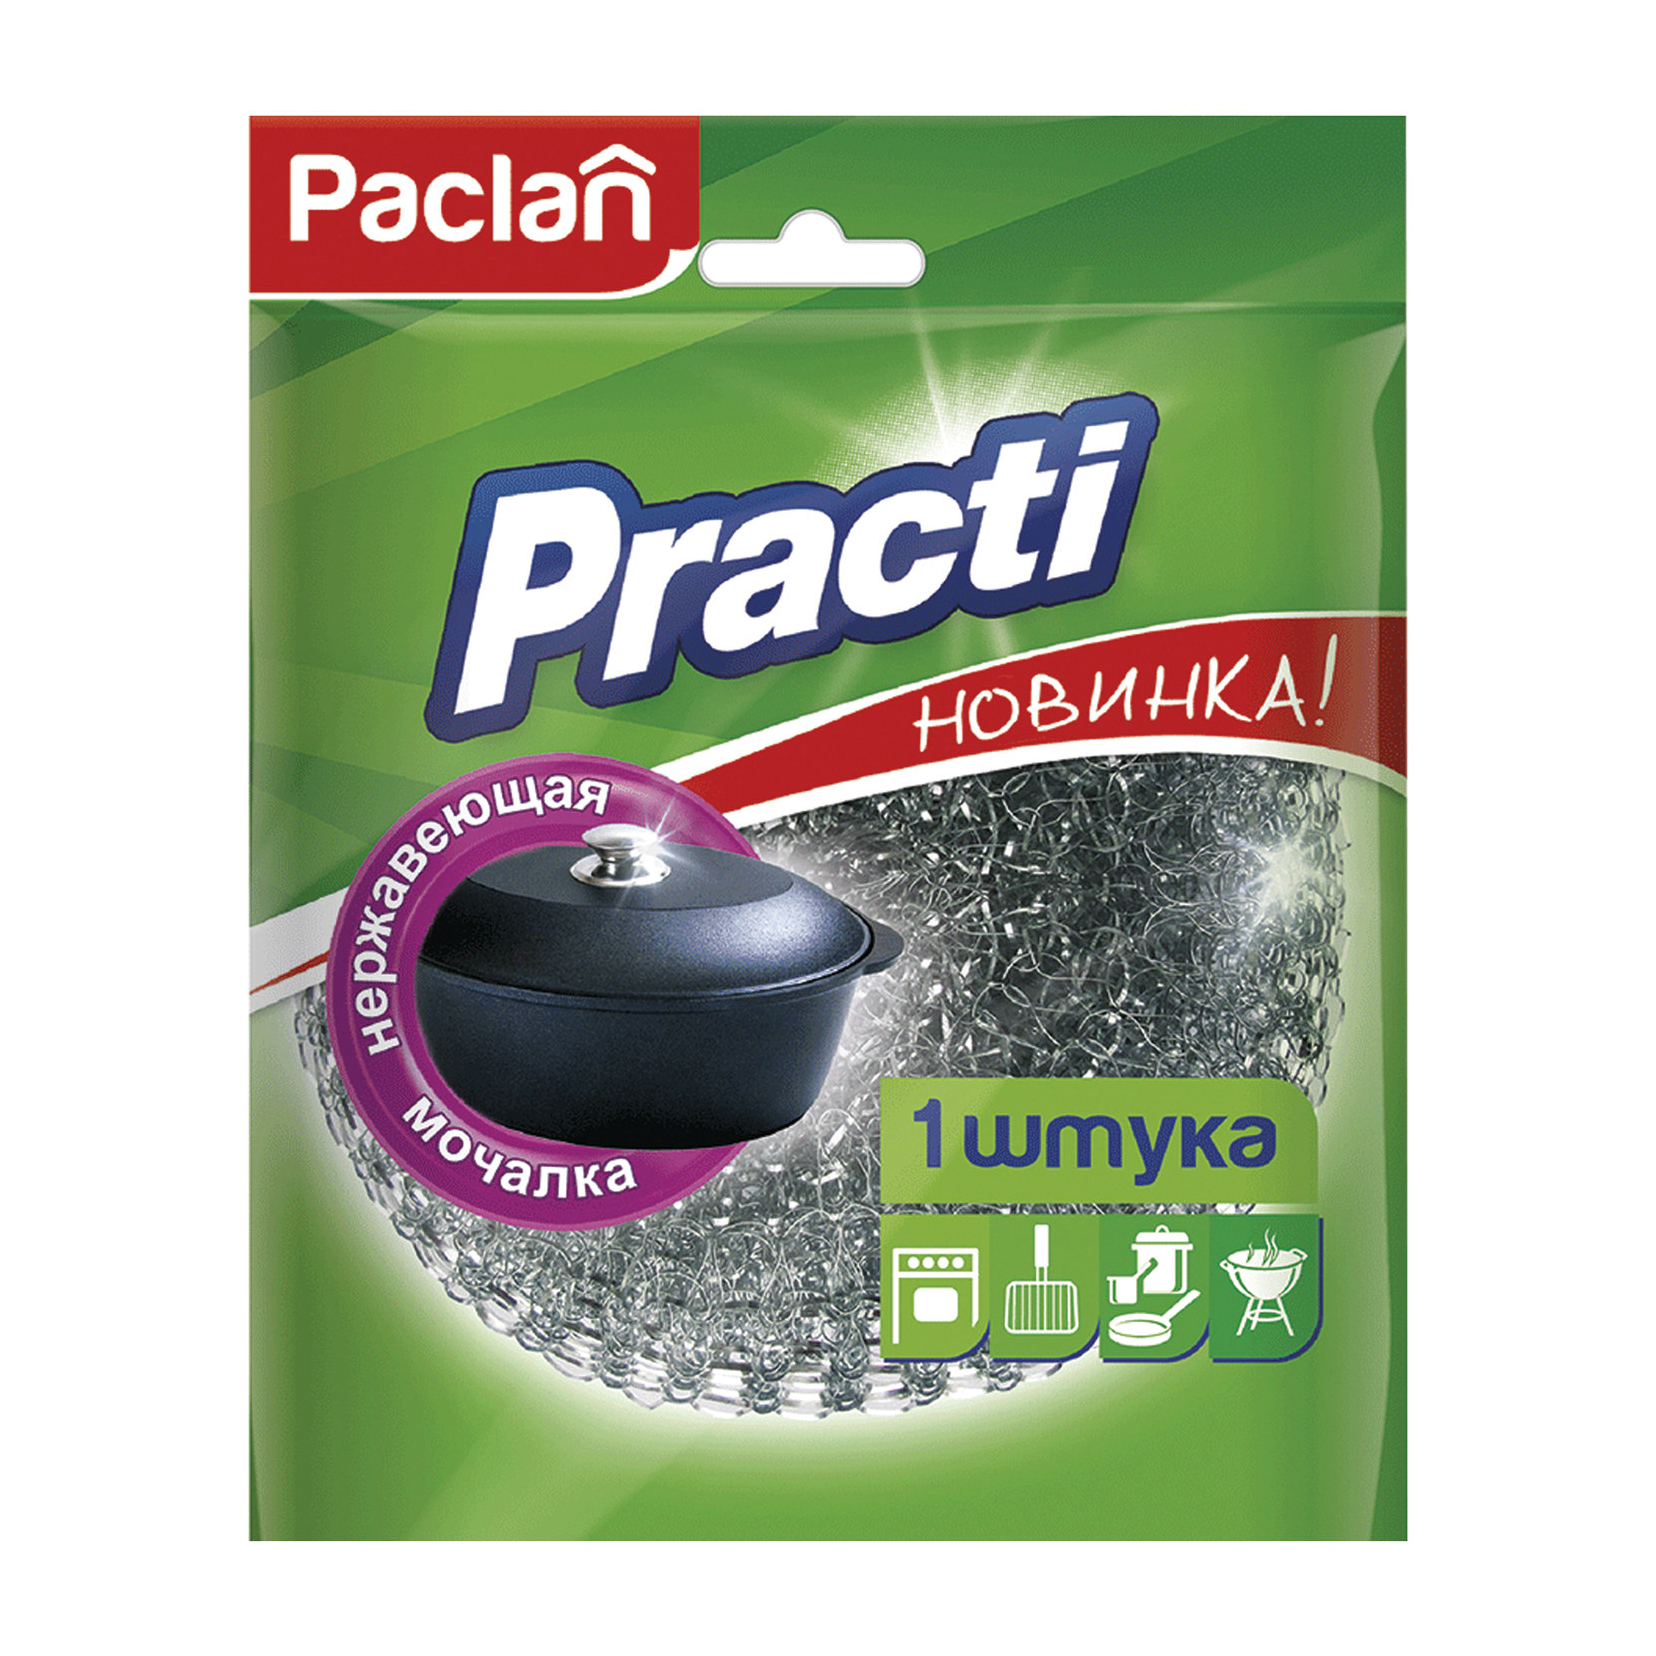 Мочалка для посуды металическая Paclan Practi 1 шт paclan мочалка пластиковая малая